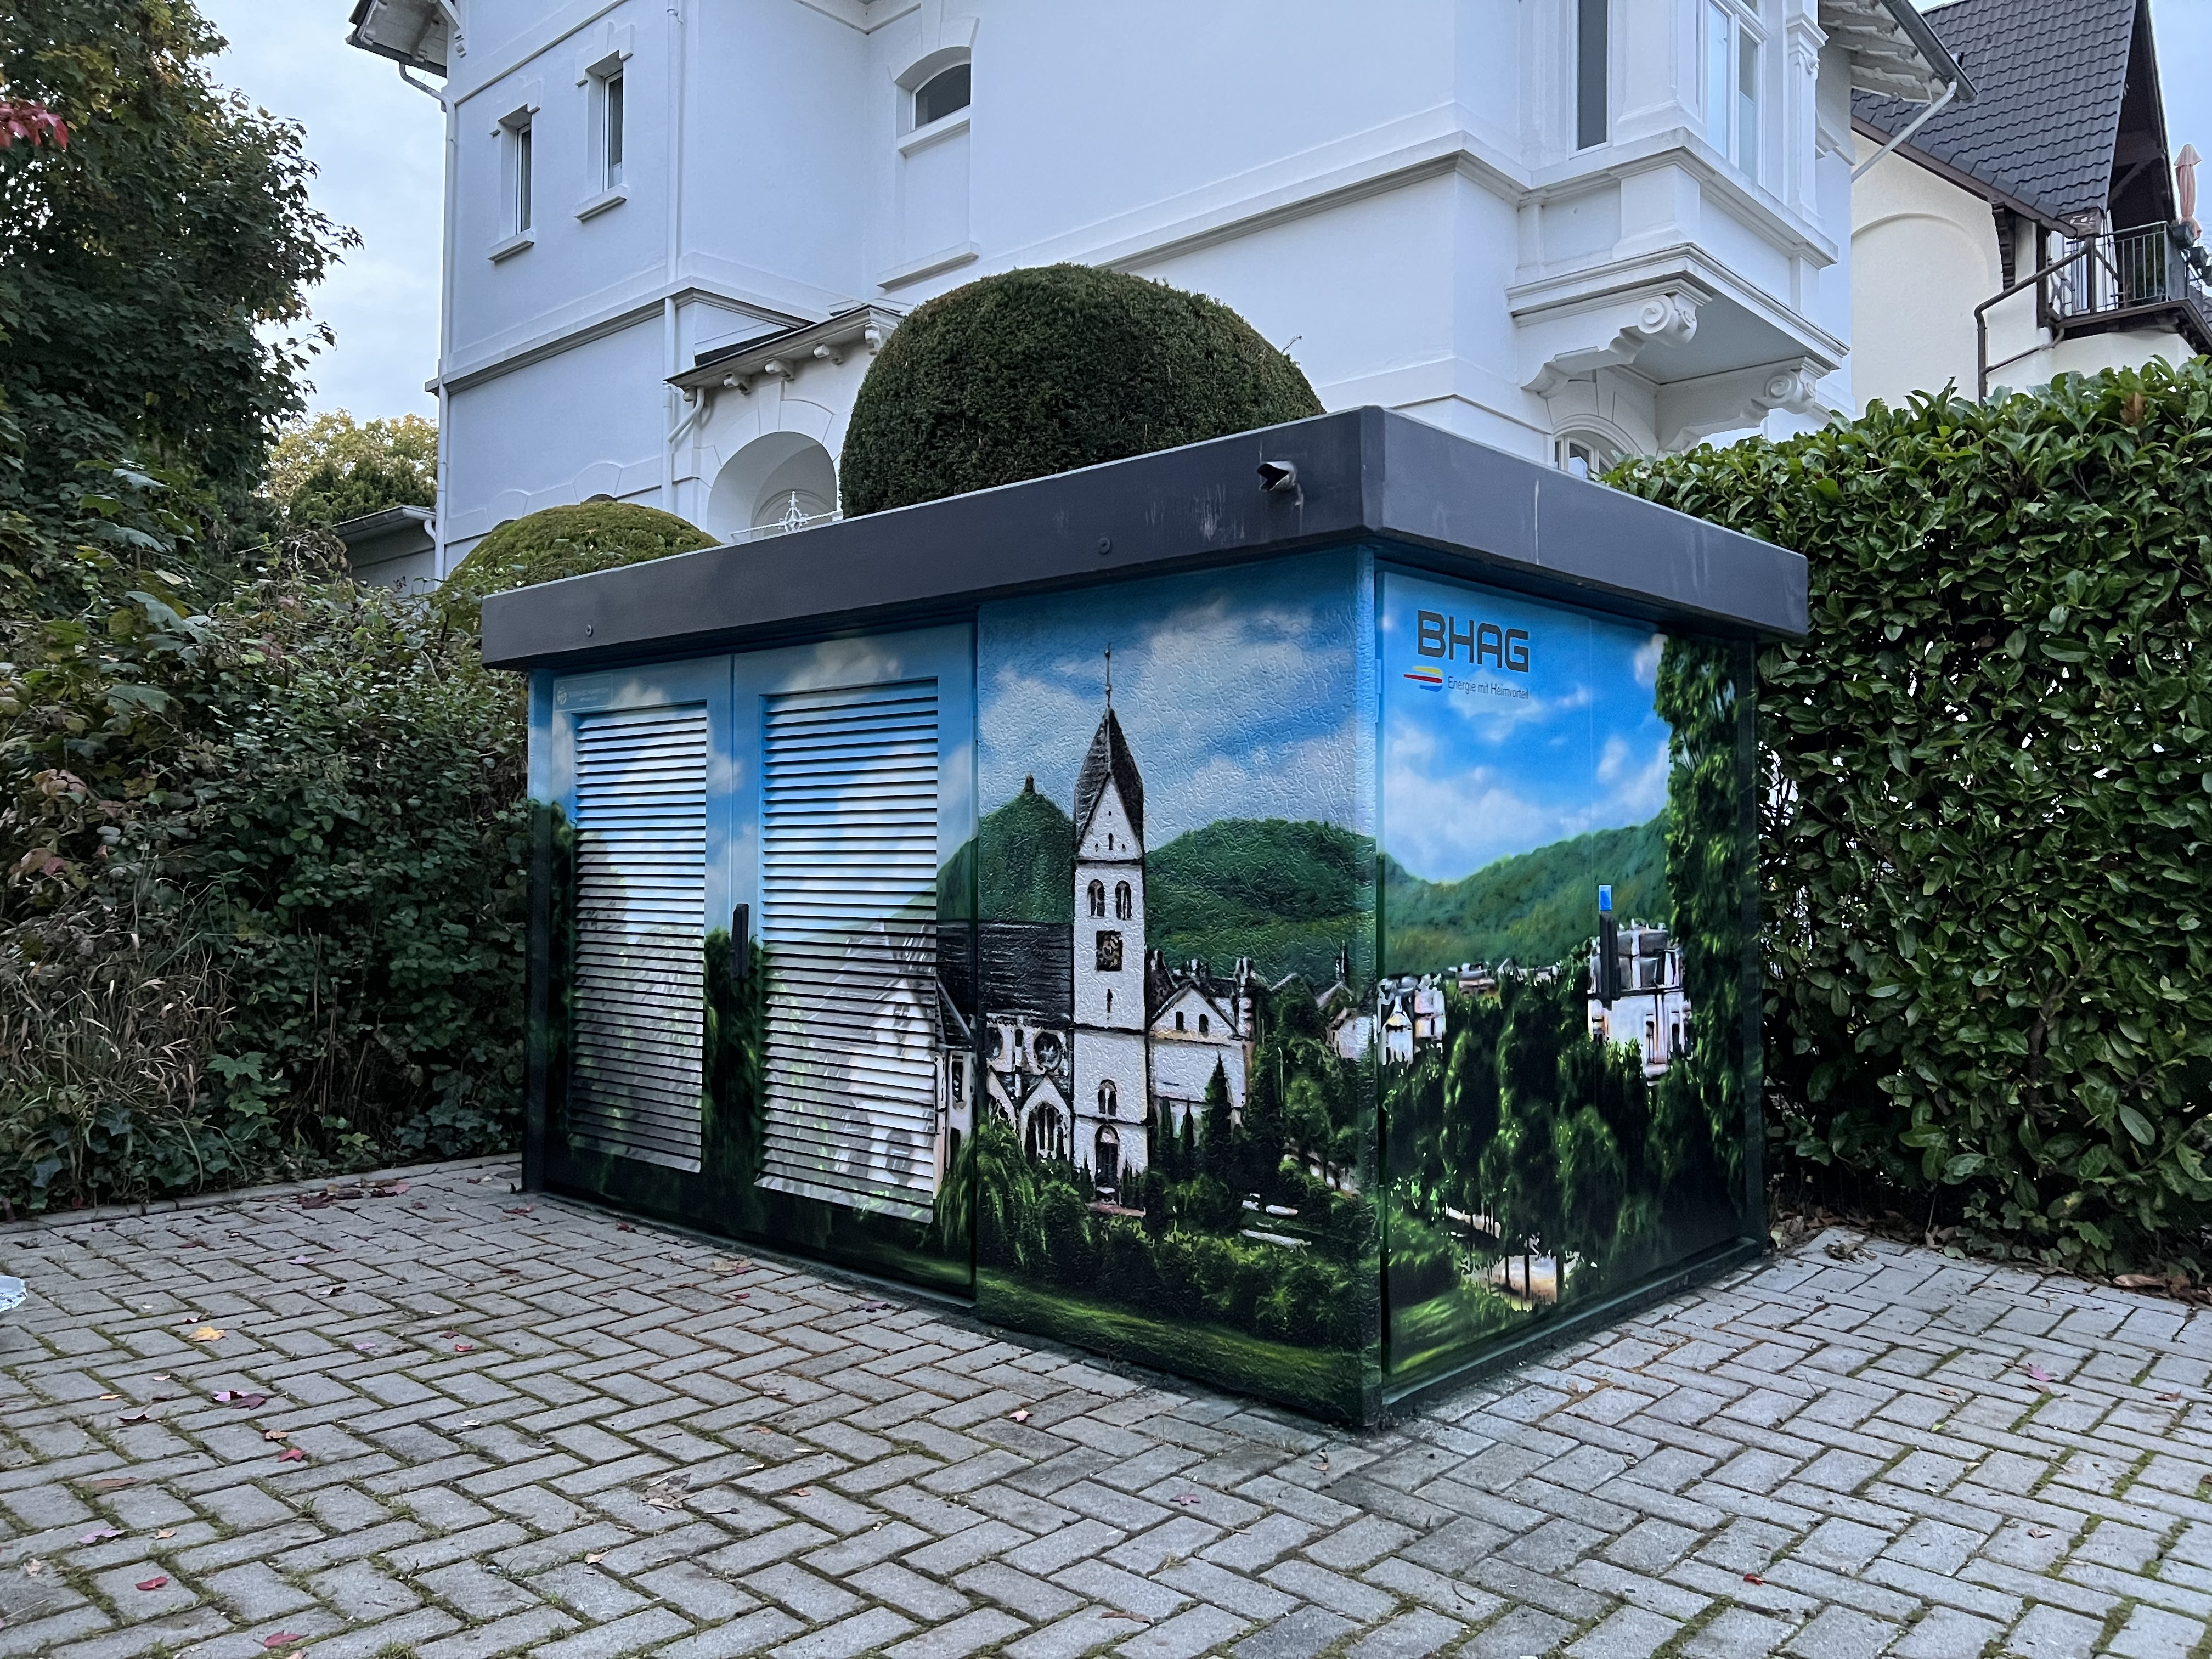 2021 - Graffiti Luisenstraße